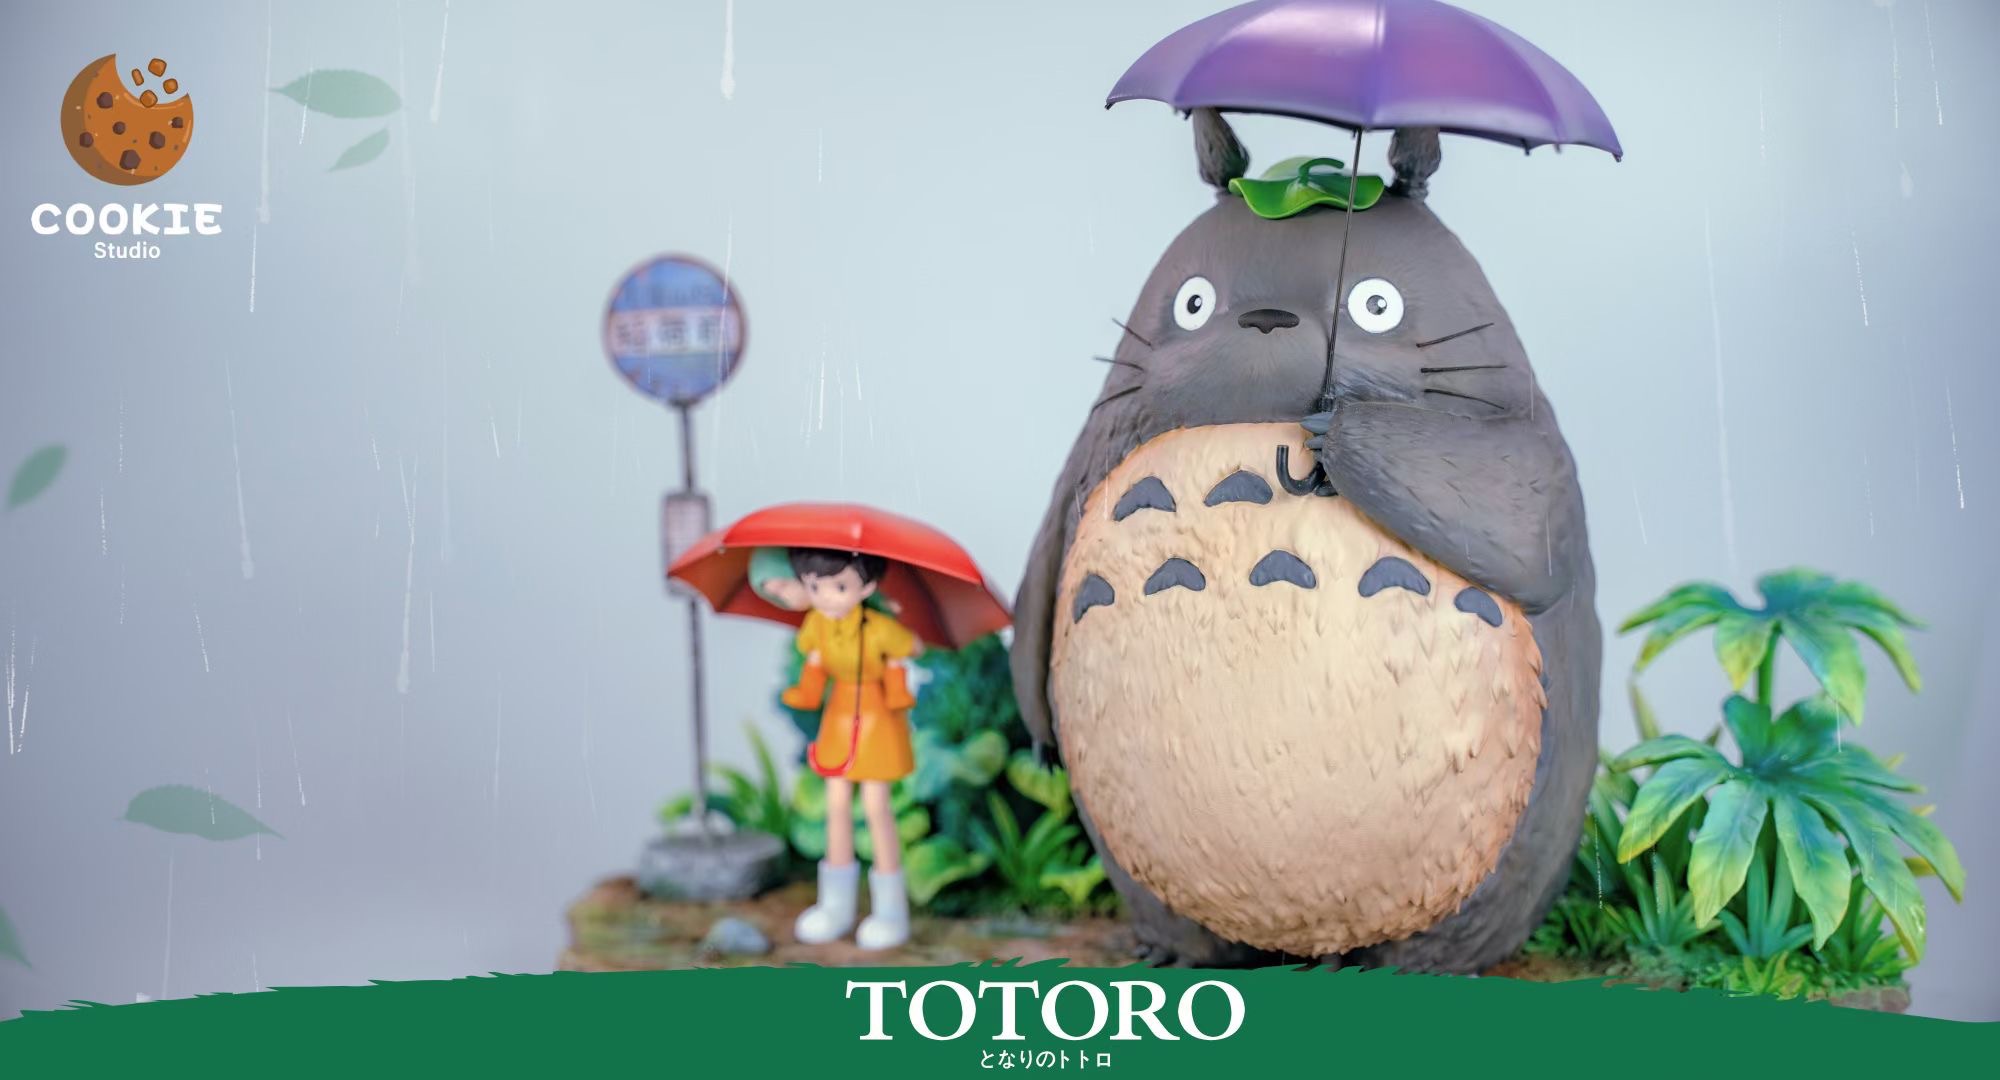 Totoro โทโทโร่ Cookie Studio (มัดจำ) [[ SOLDOUT ]]